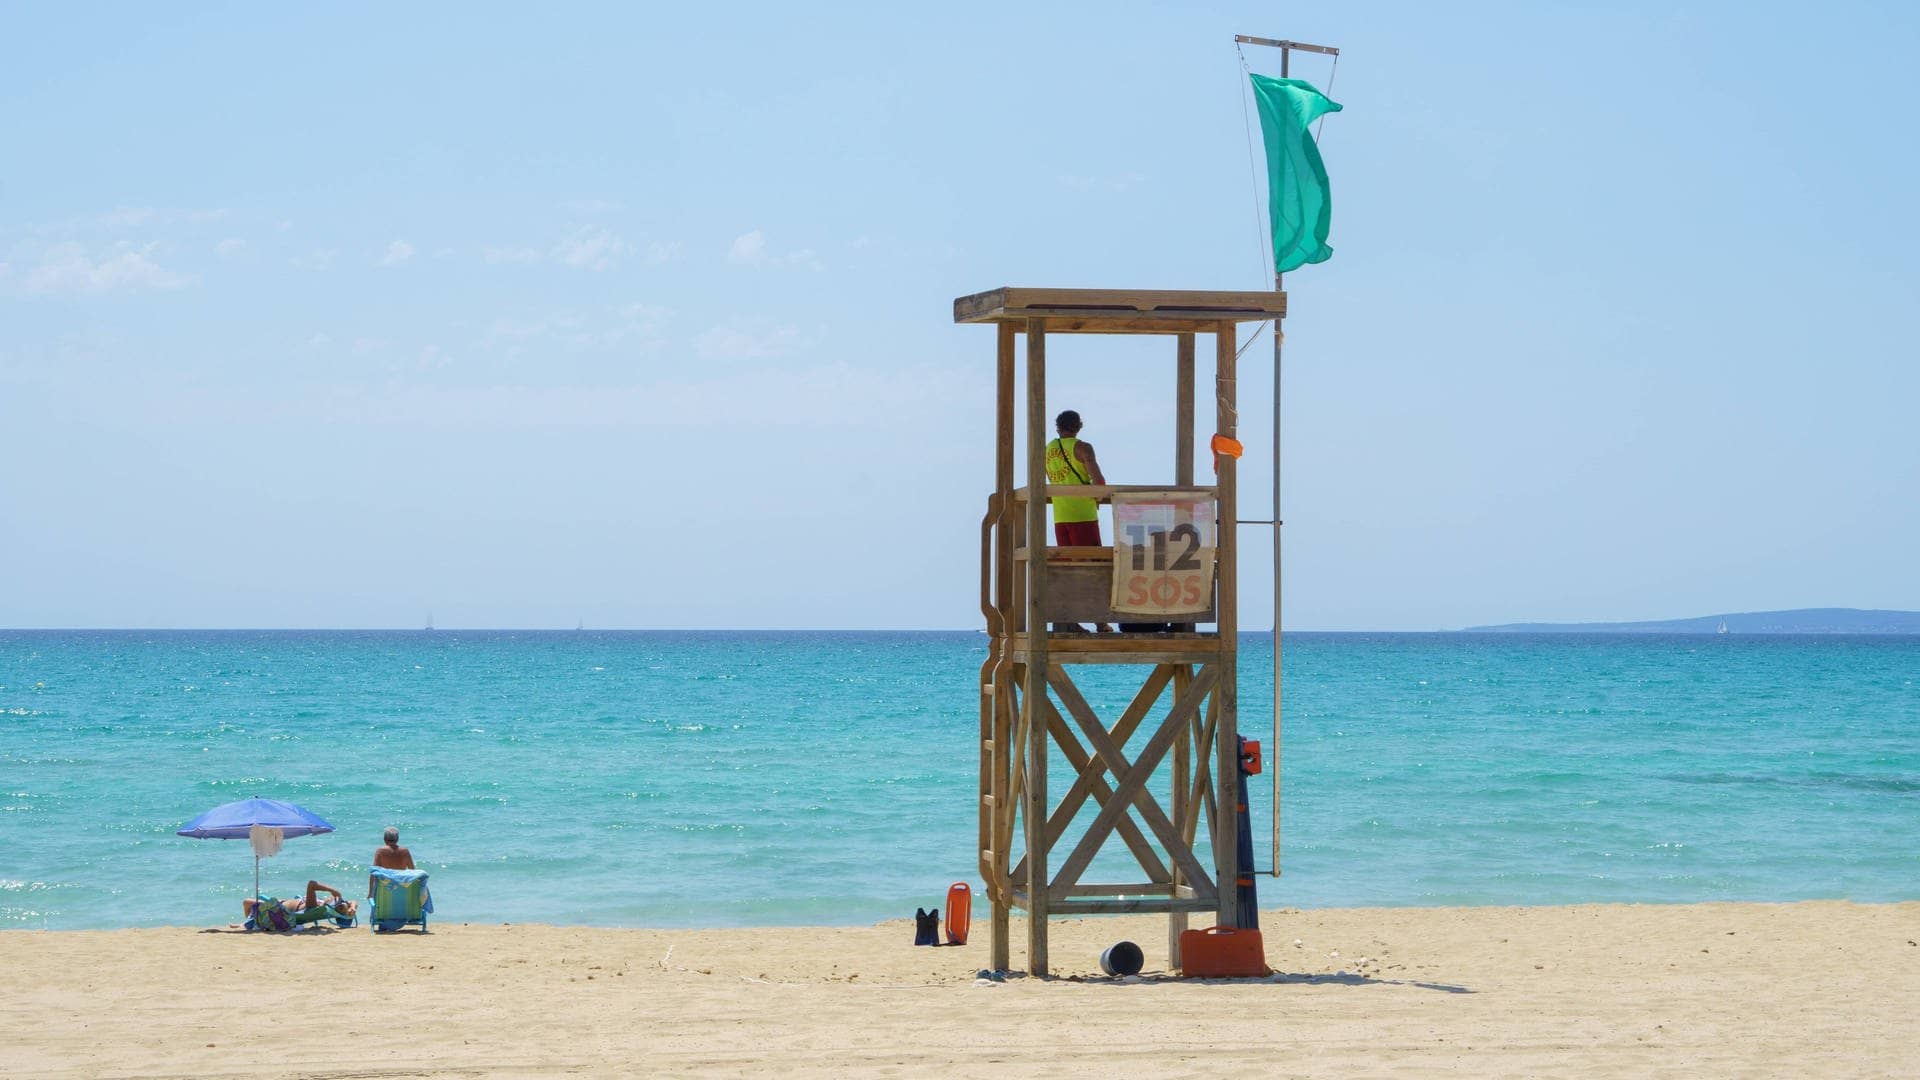 Urlaub auf Mallorca – trotz Corona? (Foto: IMAGO, IMAGO/Chris Emil Janßen)